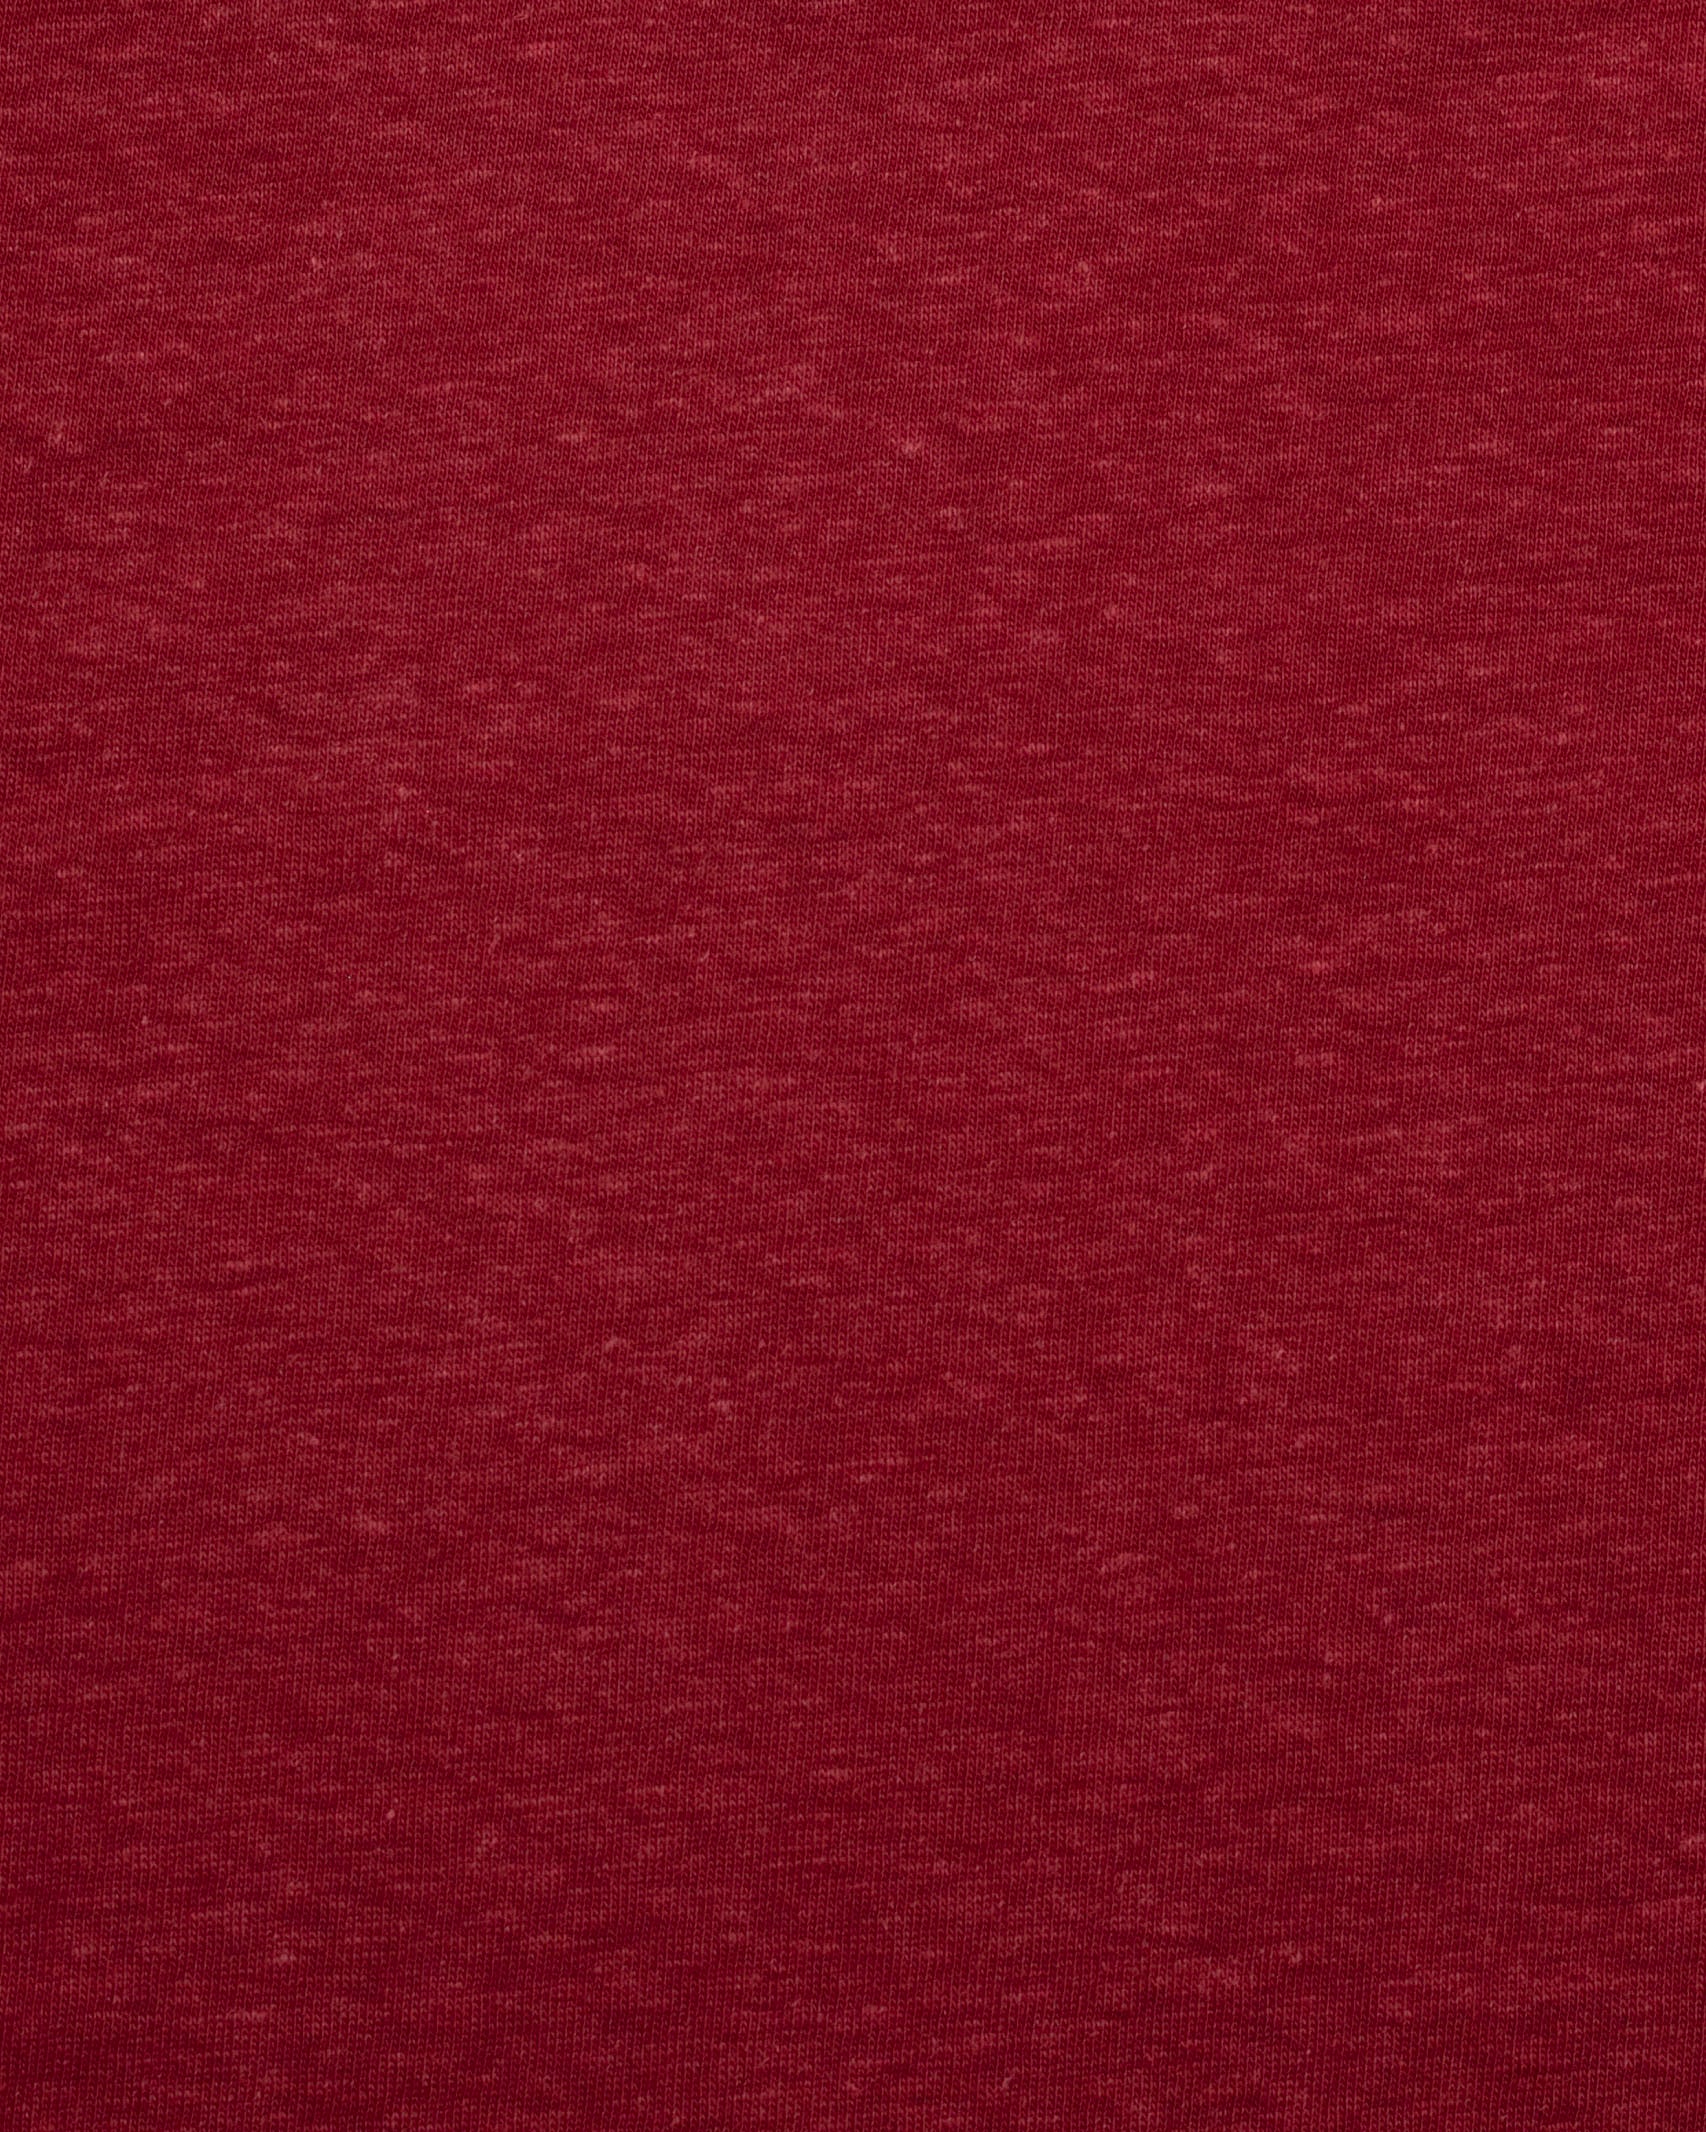 Fabric | Red Organic Cotton/Hemp Knit